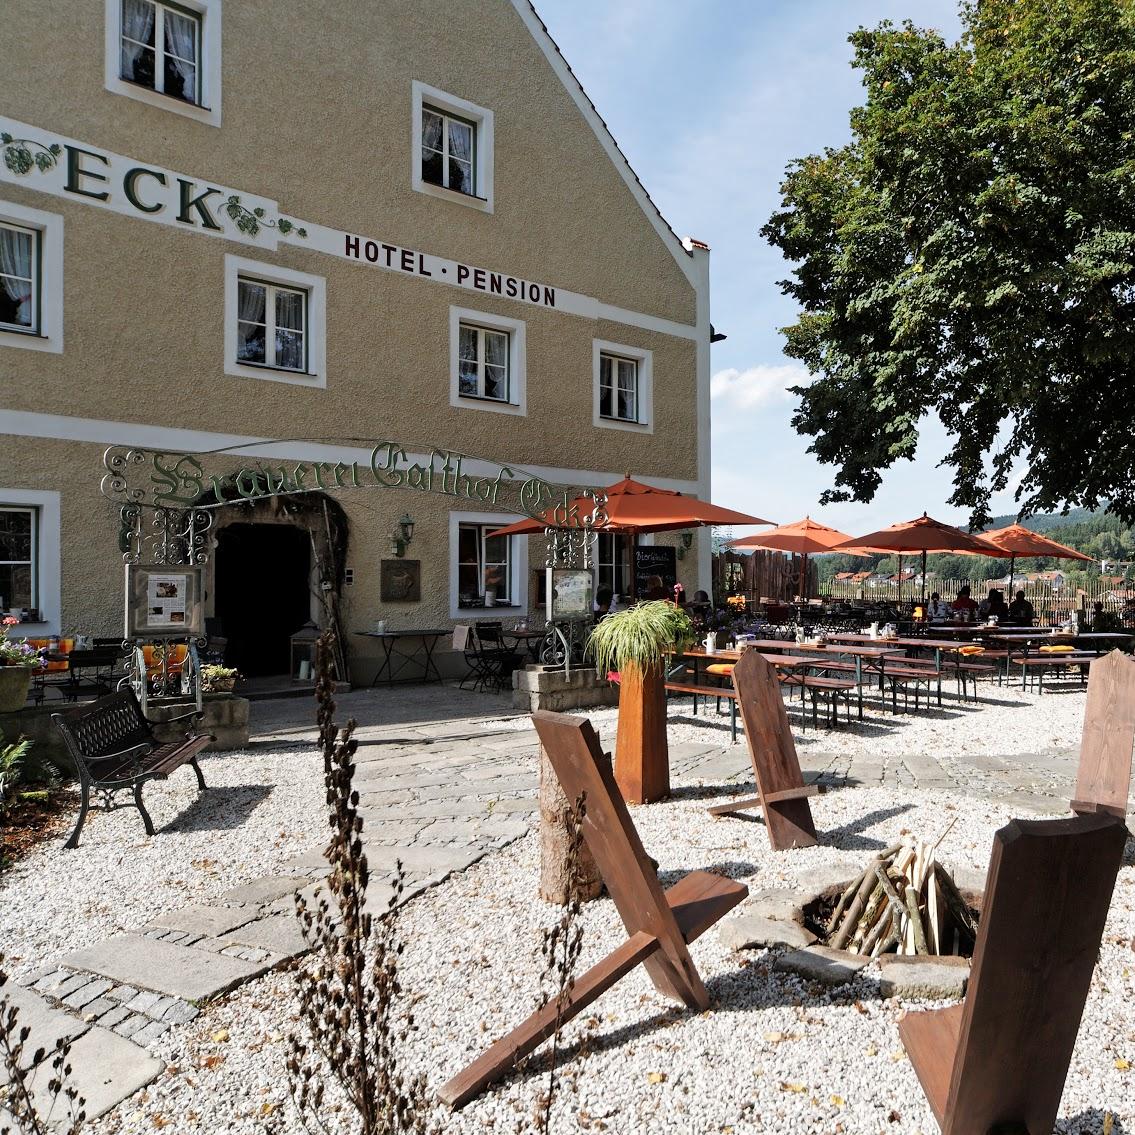 Restaurant "Brauerei Gasthof ECK e.K." in Böbrach